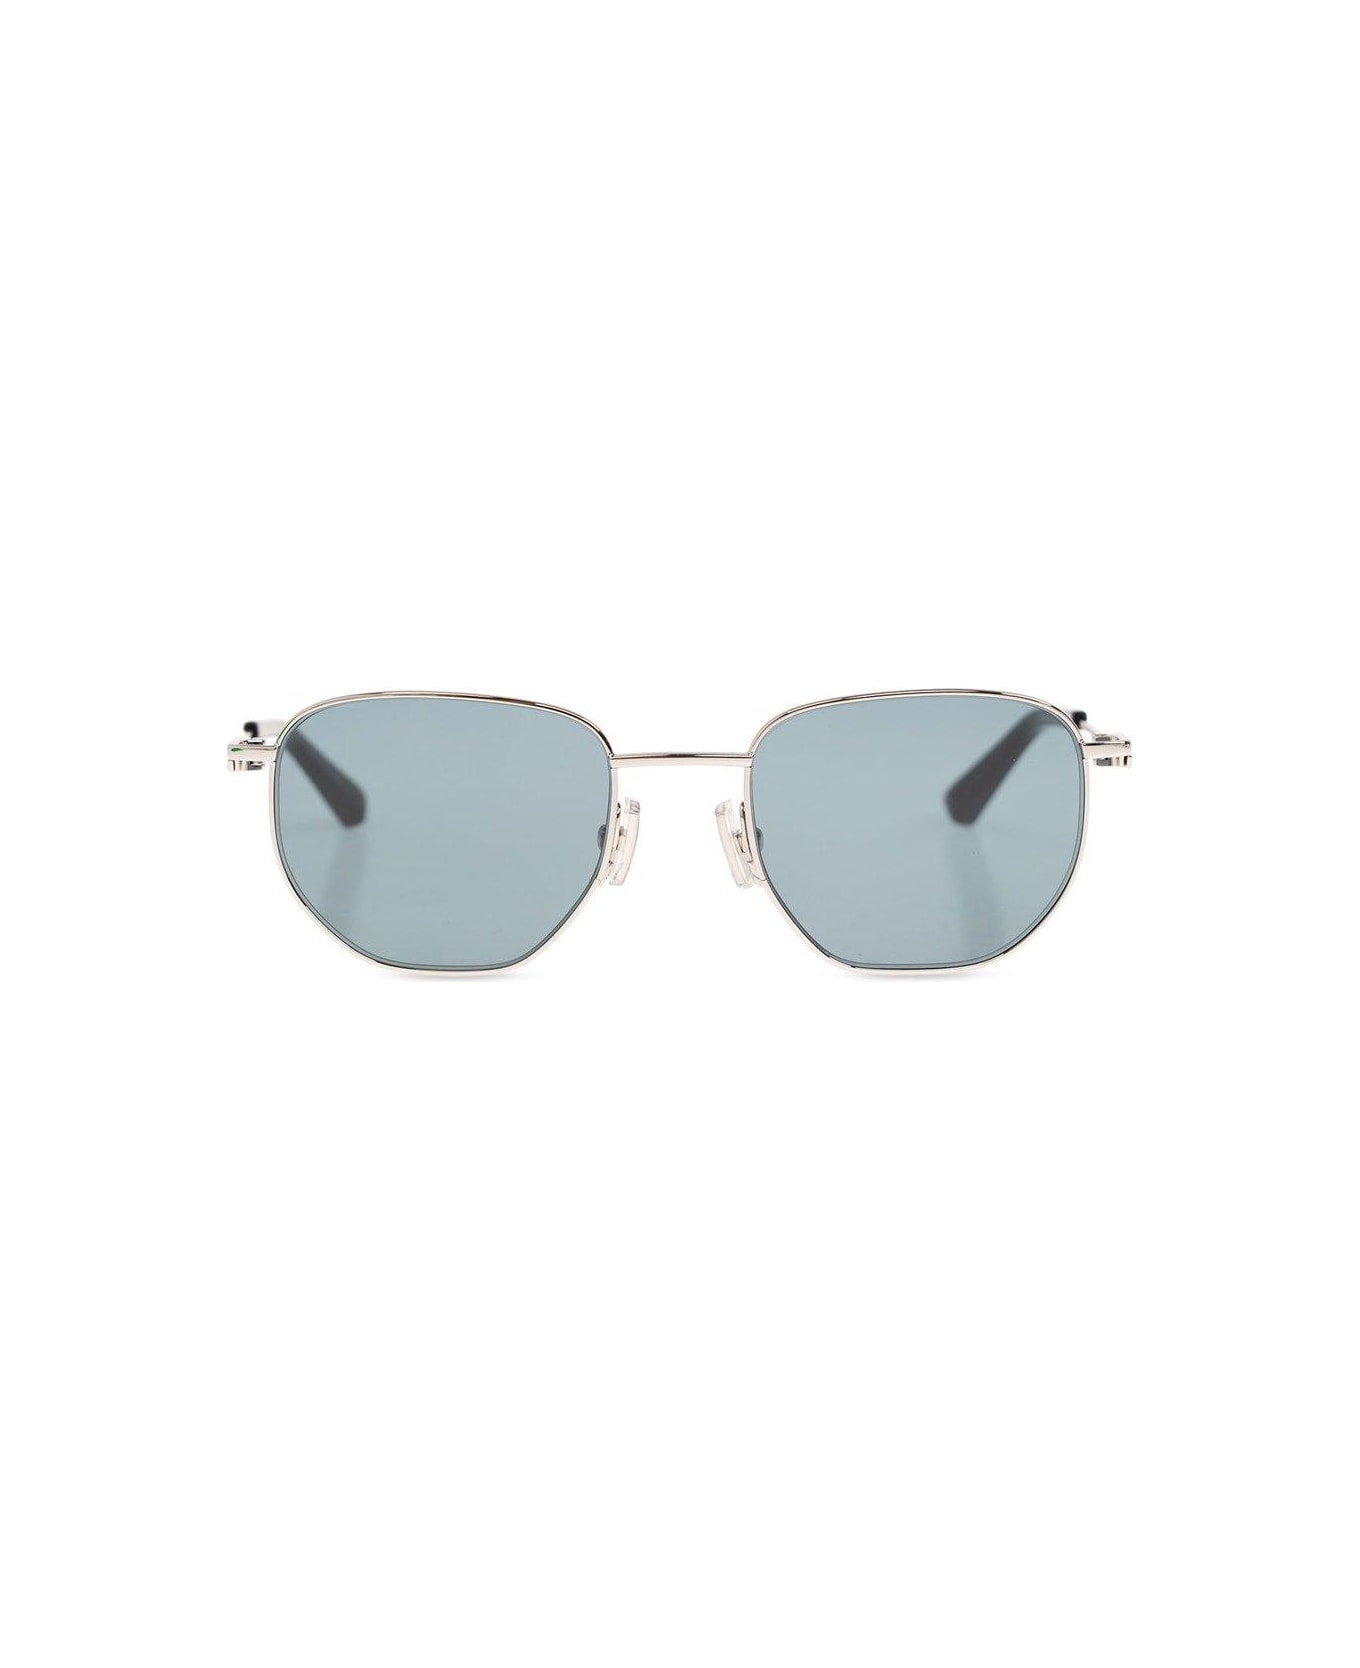 Bottega Veneta Eyewear Round-frame Sunglasses - Silver grenn サングラス